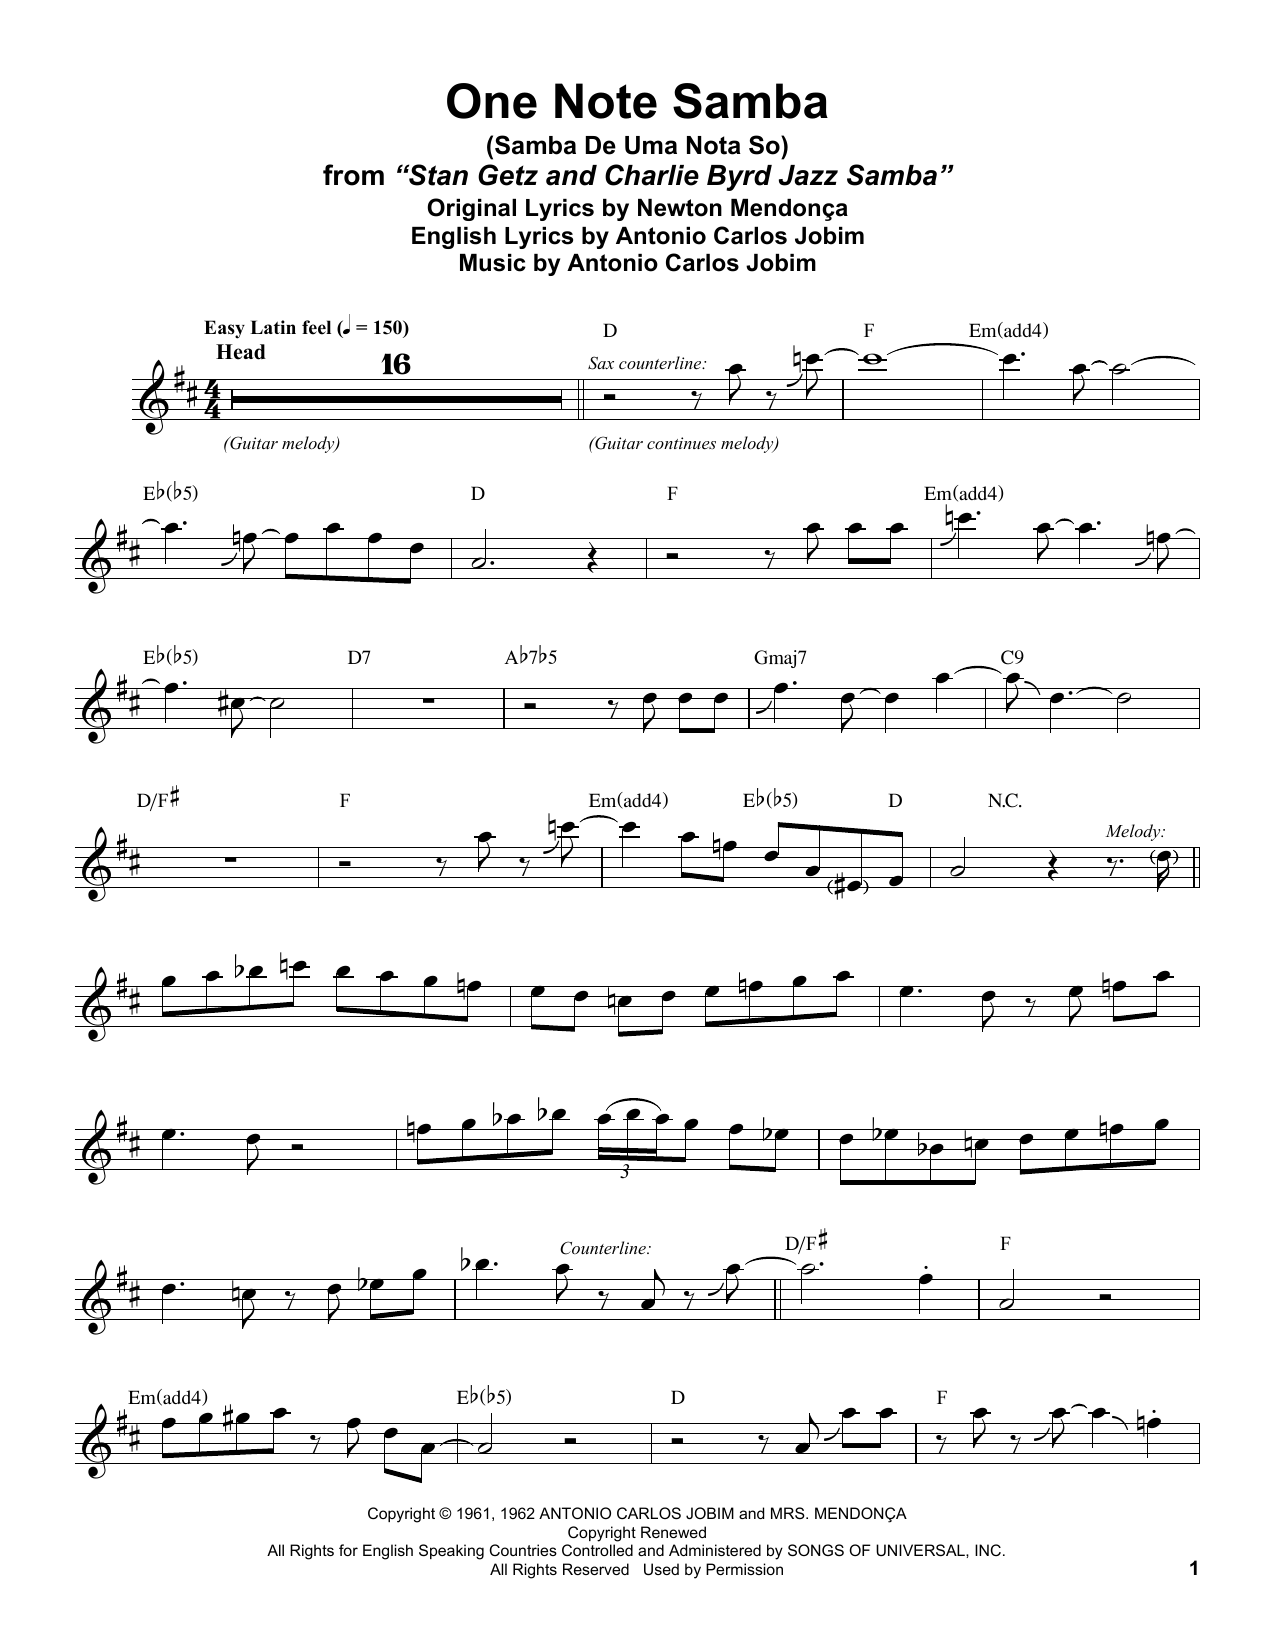 Stan Getz One Note Samba (Samba De Uma Nota So) Sheet Music Notes & Chords for Tenor Sax Transcription - Download or Print PDF